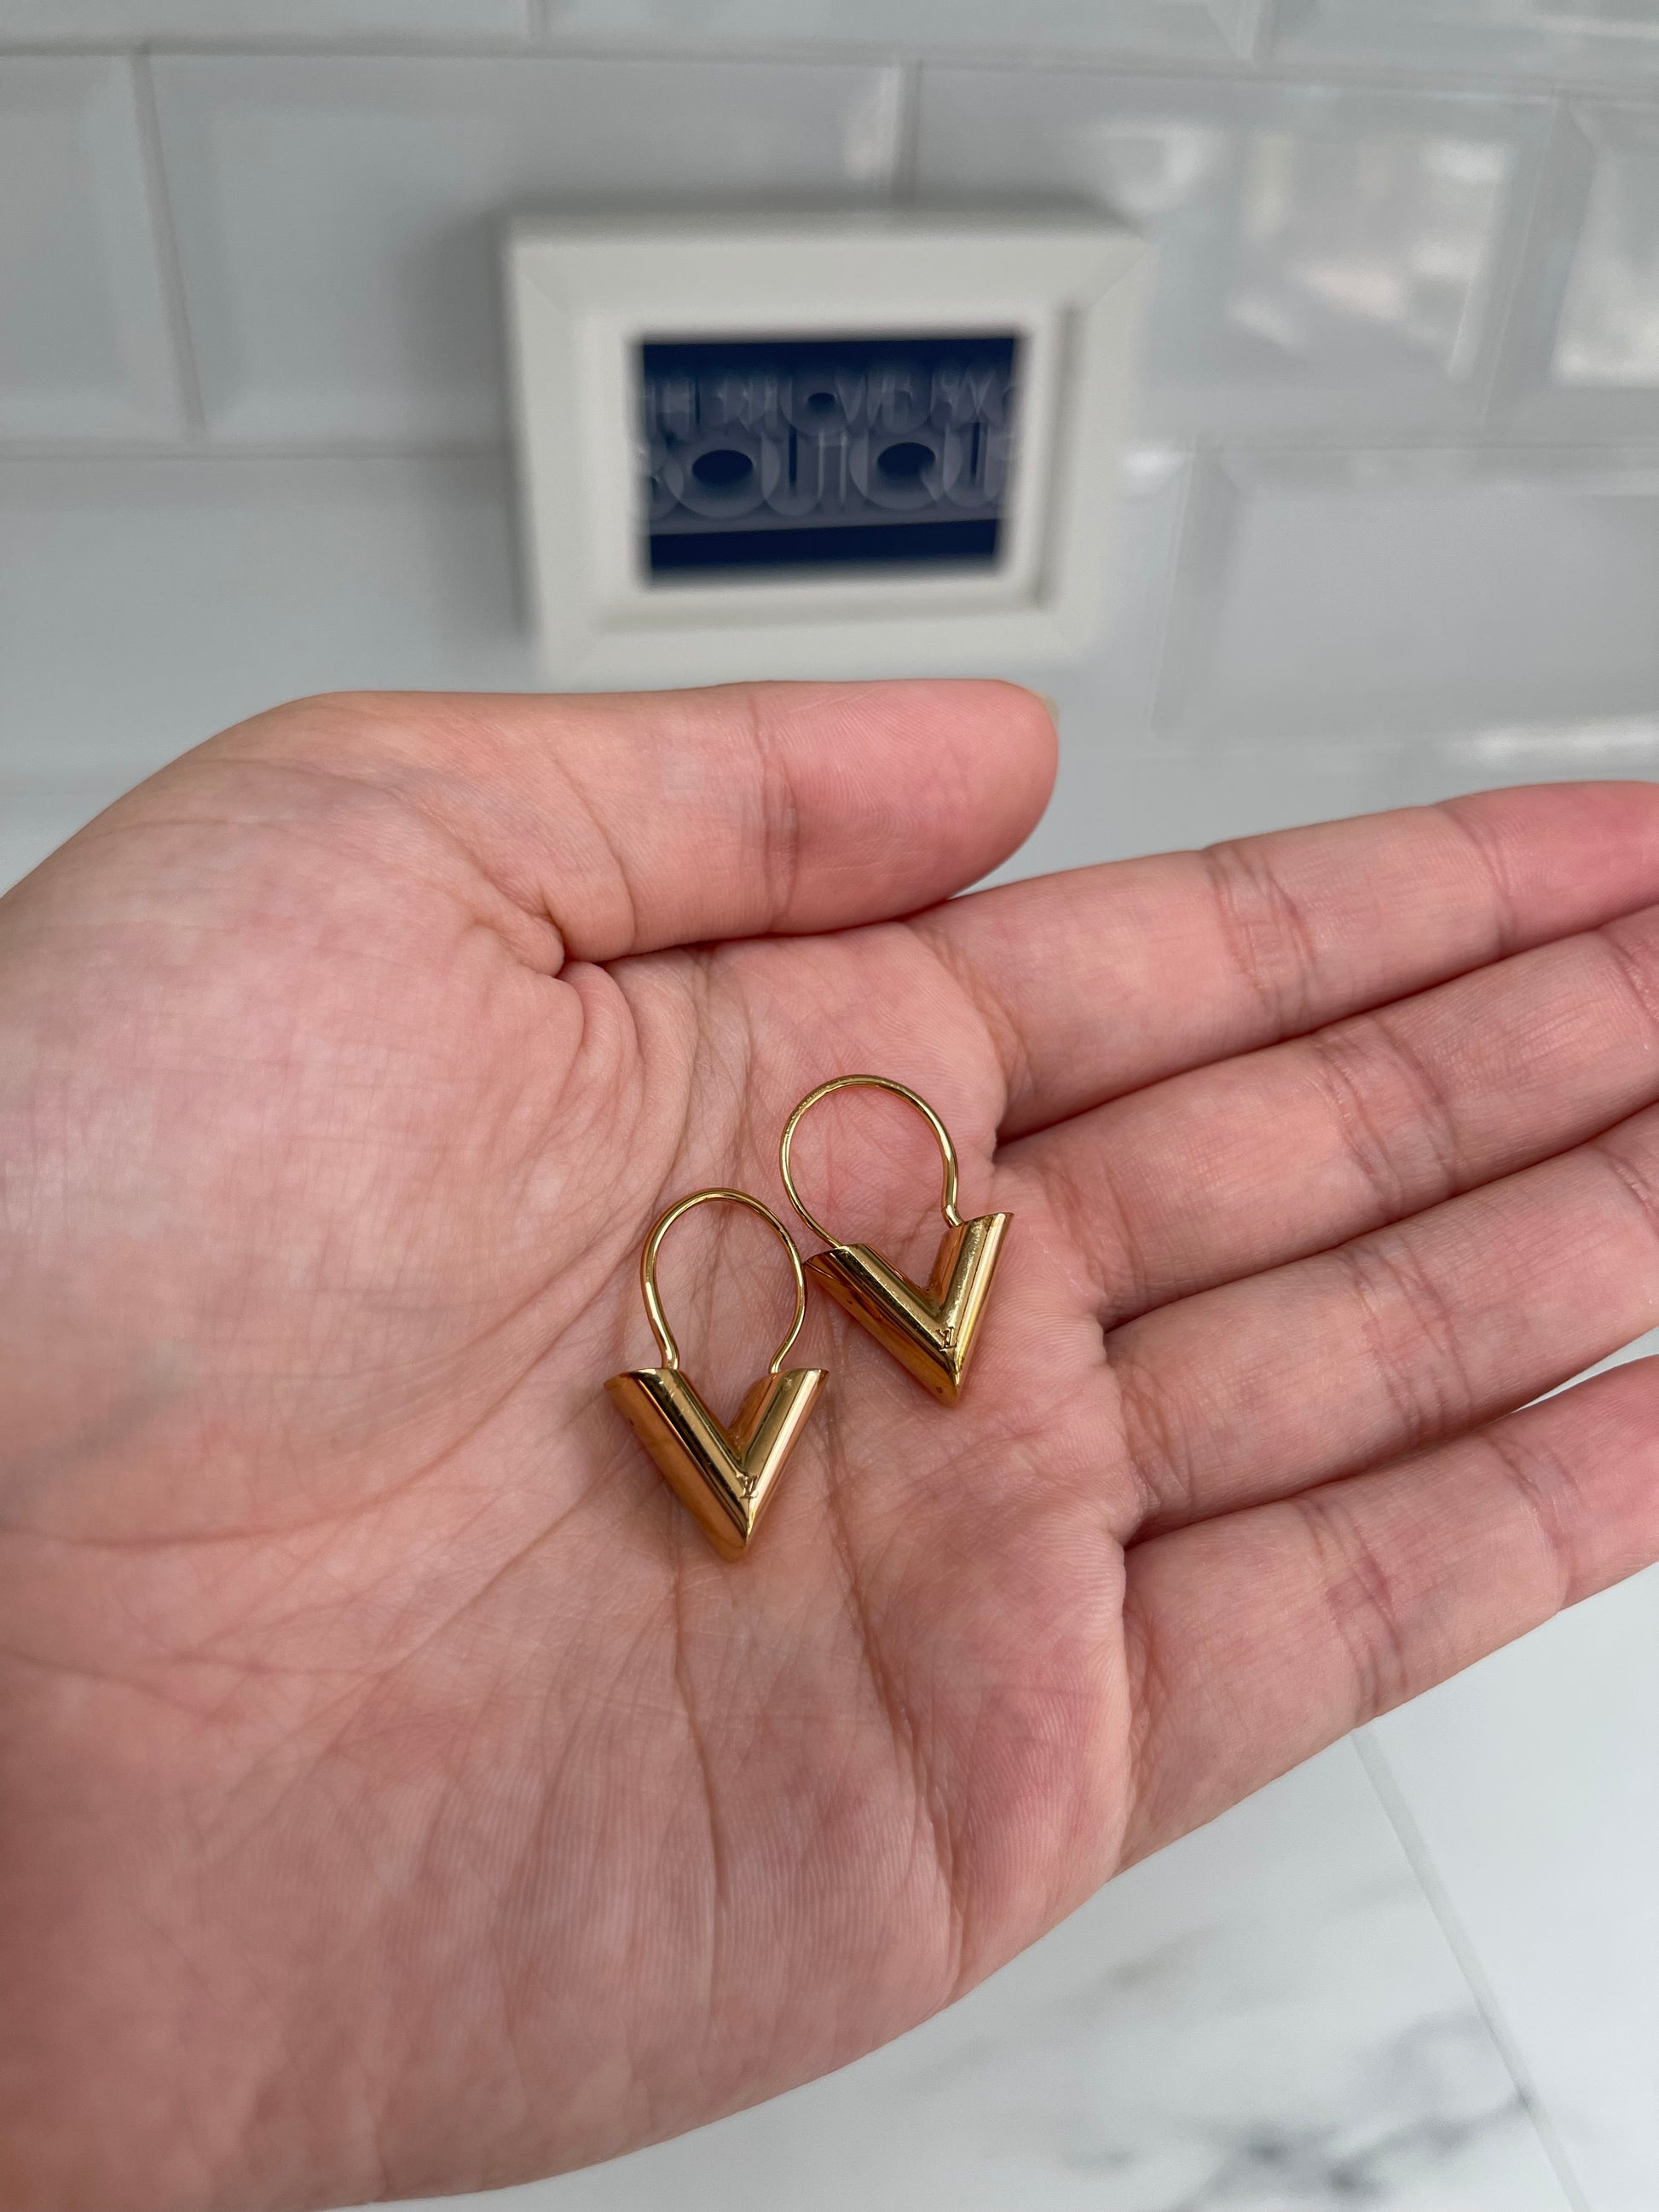 Louis Vuitton ‘V’ earrings